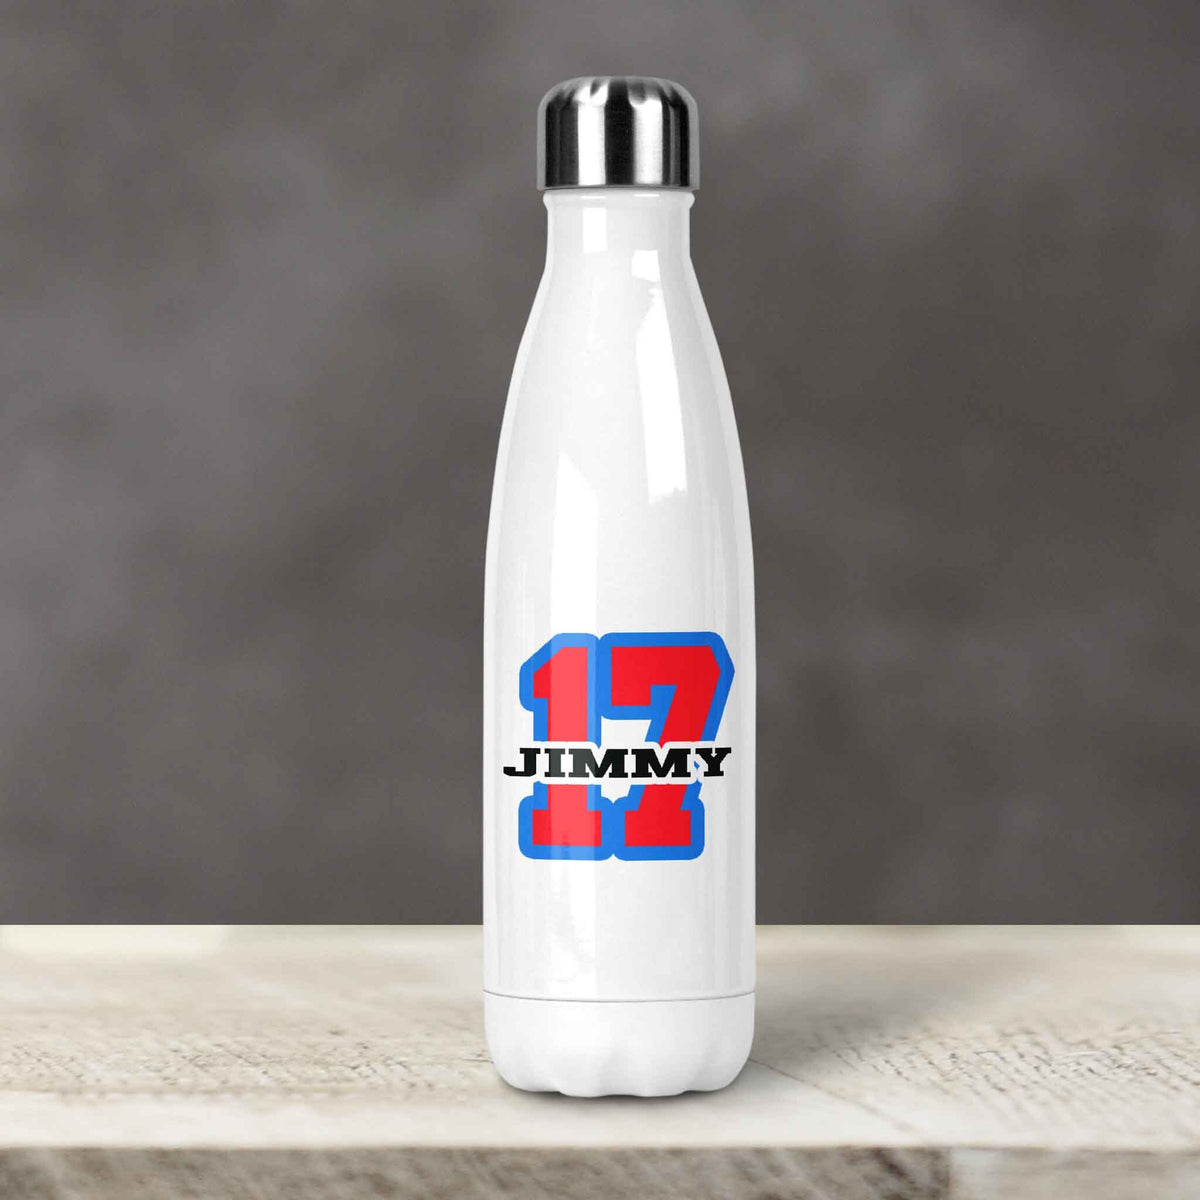 Personalized Water Bottles | Custom Stainless Steel Water Bottles | 17 oz Soda | Custom Team Logo